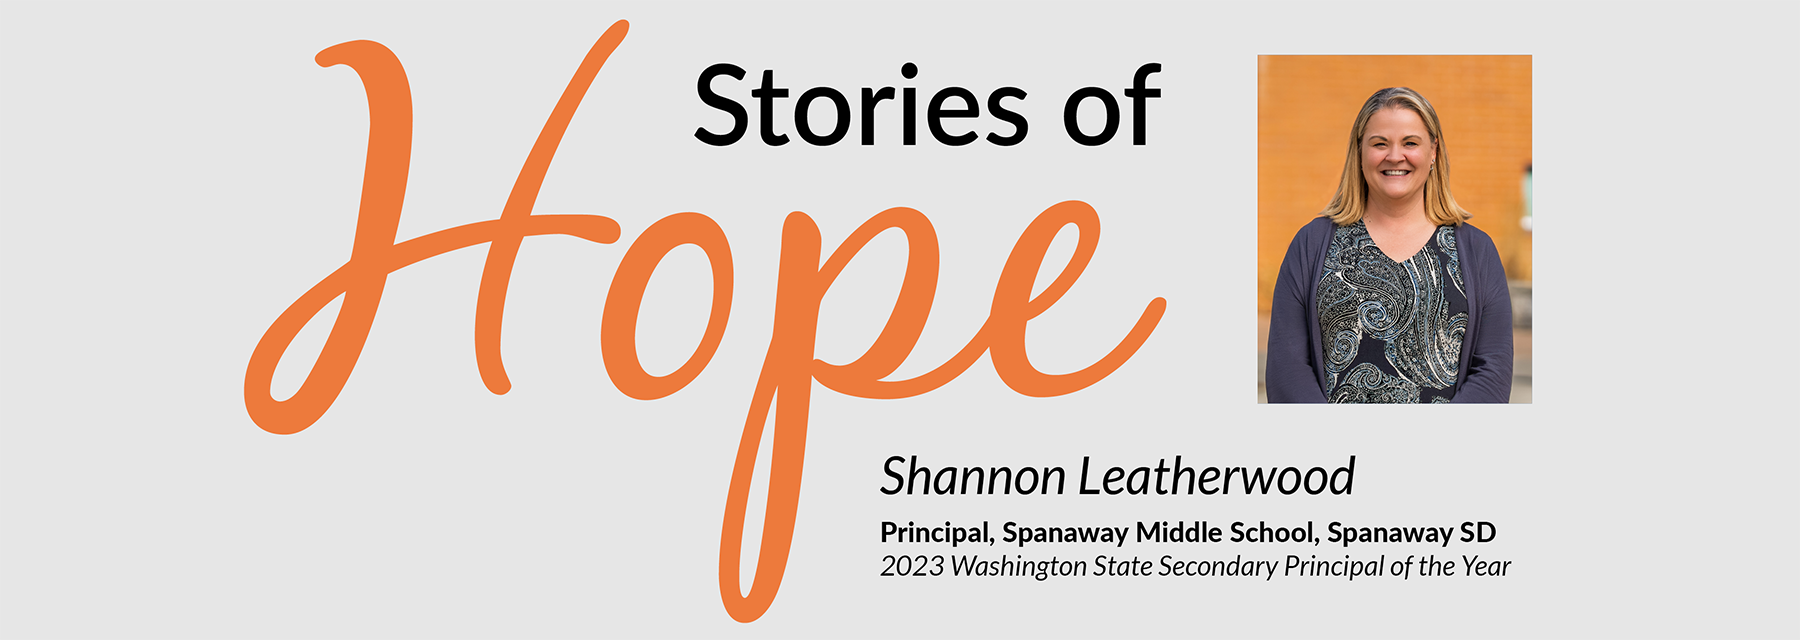 Shannon Leatherwood Story of Hope blog post header